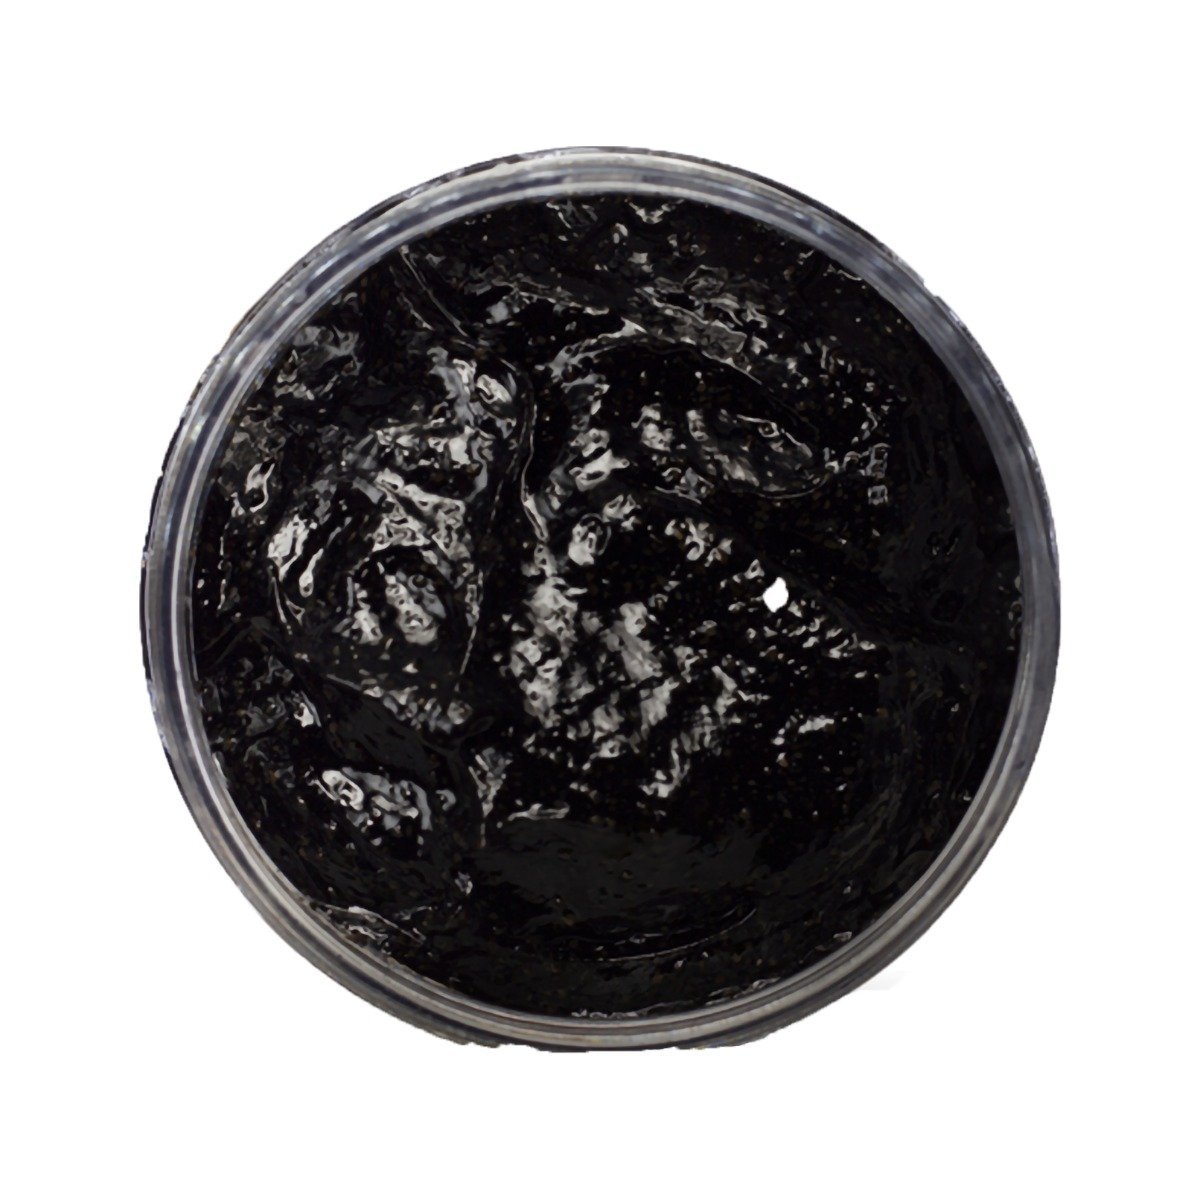 Hadwa Cosmetics Coal Scrub – 280ml - Bloom Pharmacy